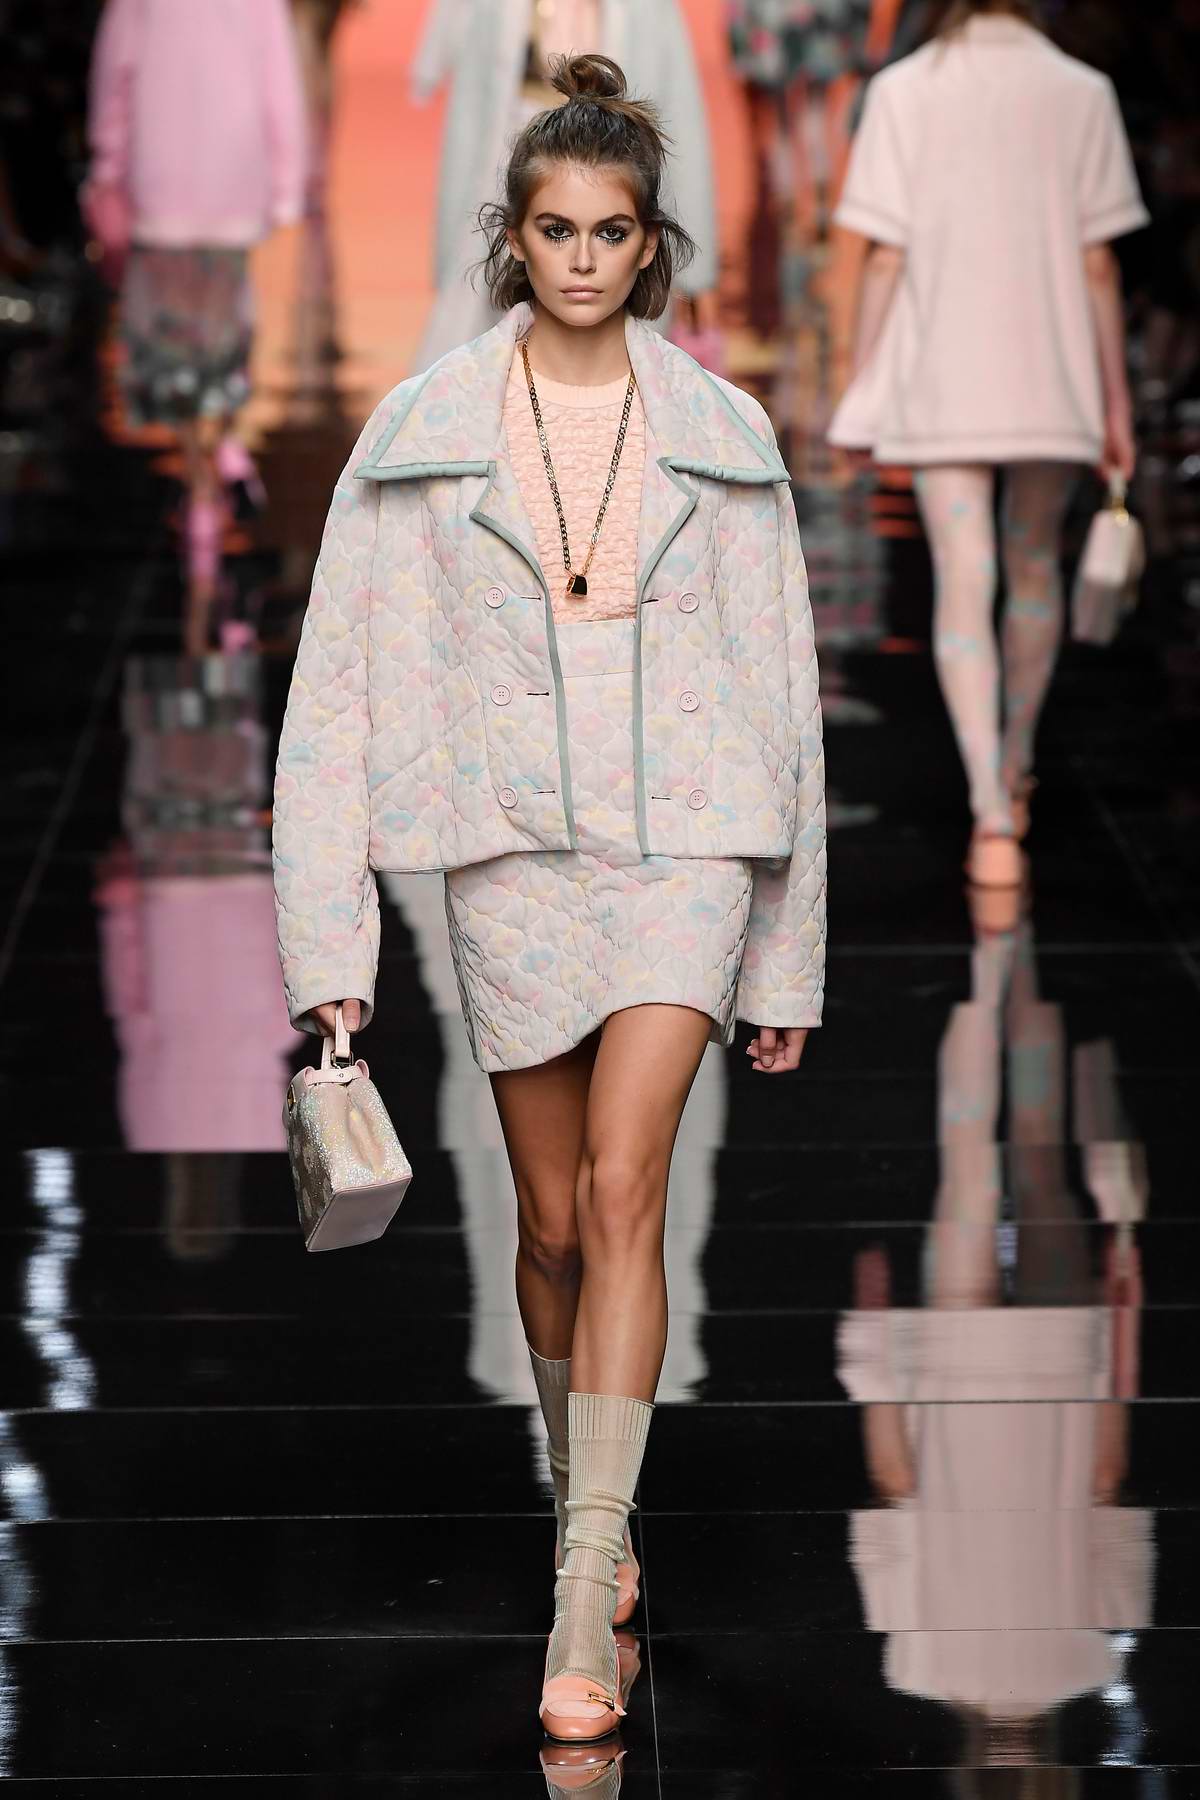 Milan Fashion Week: Fendi Spring/Summer 2020 - A&E Magazine